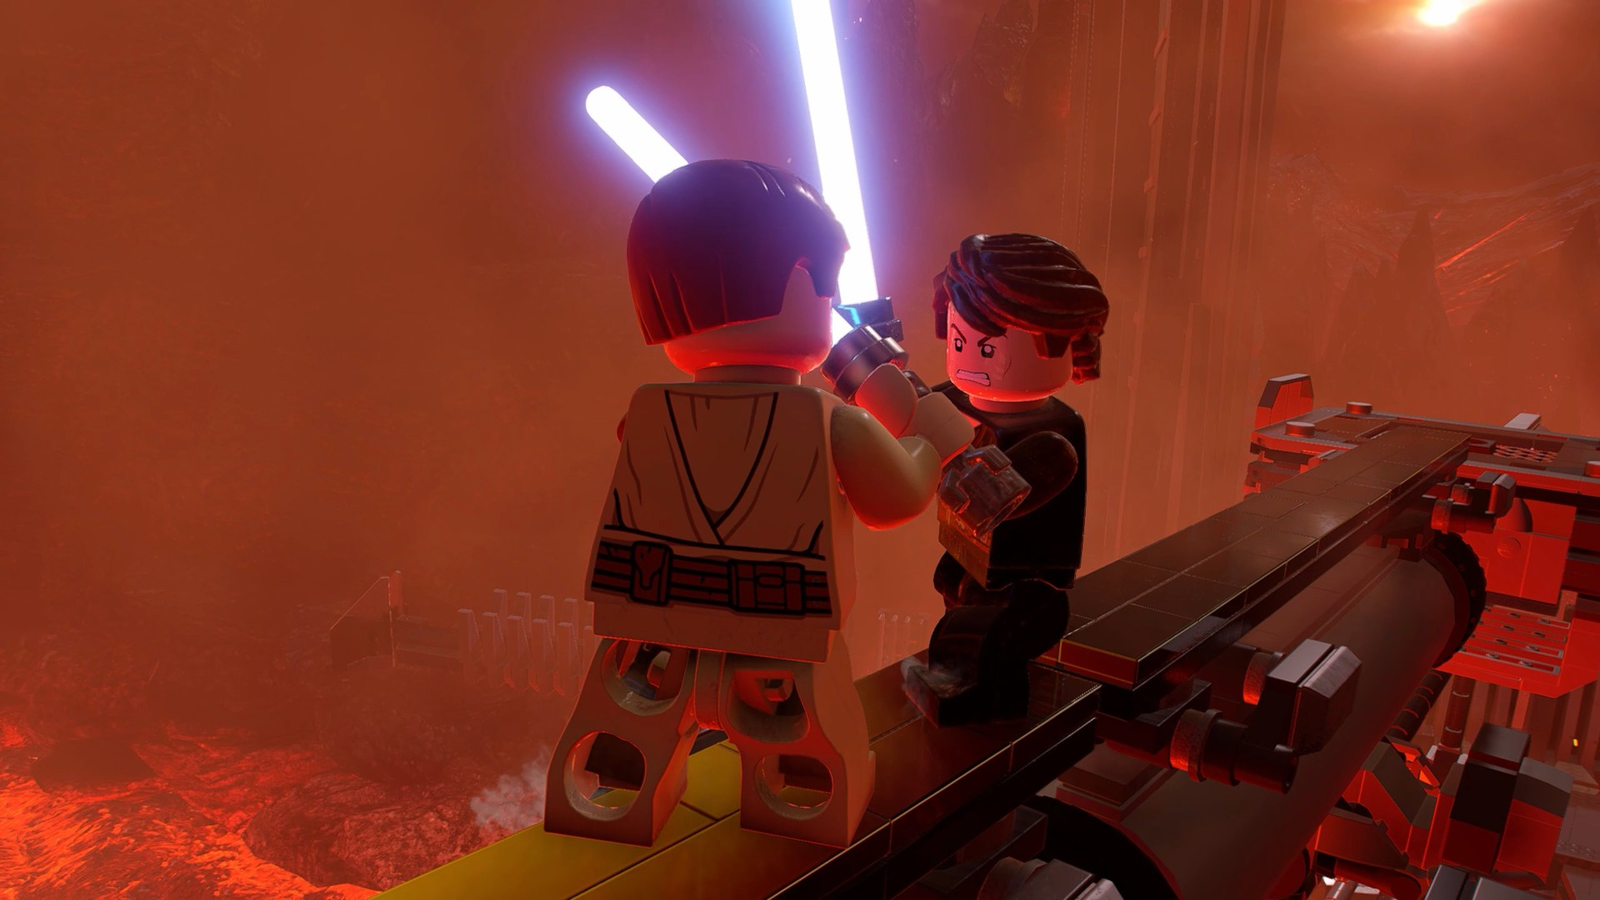 Lego Star Wars The Skywalker Saga cheat codes and extras